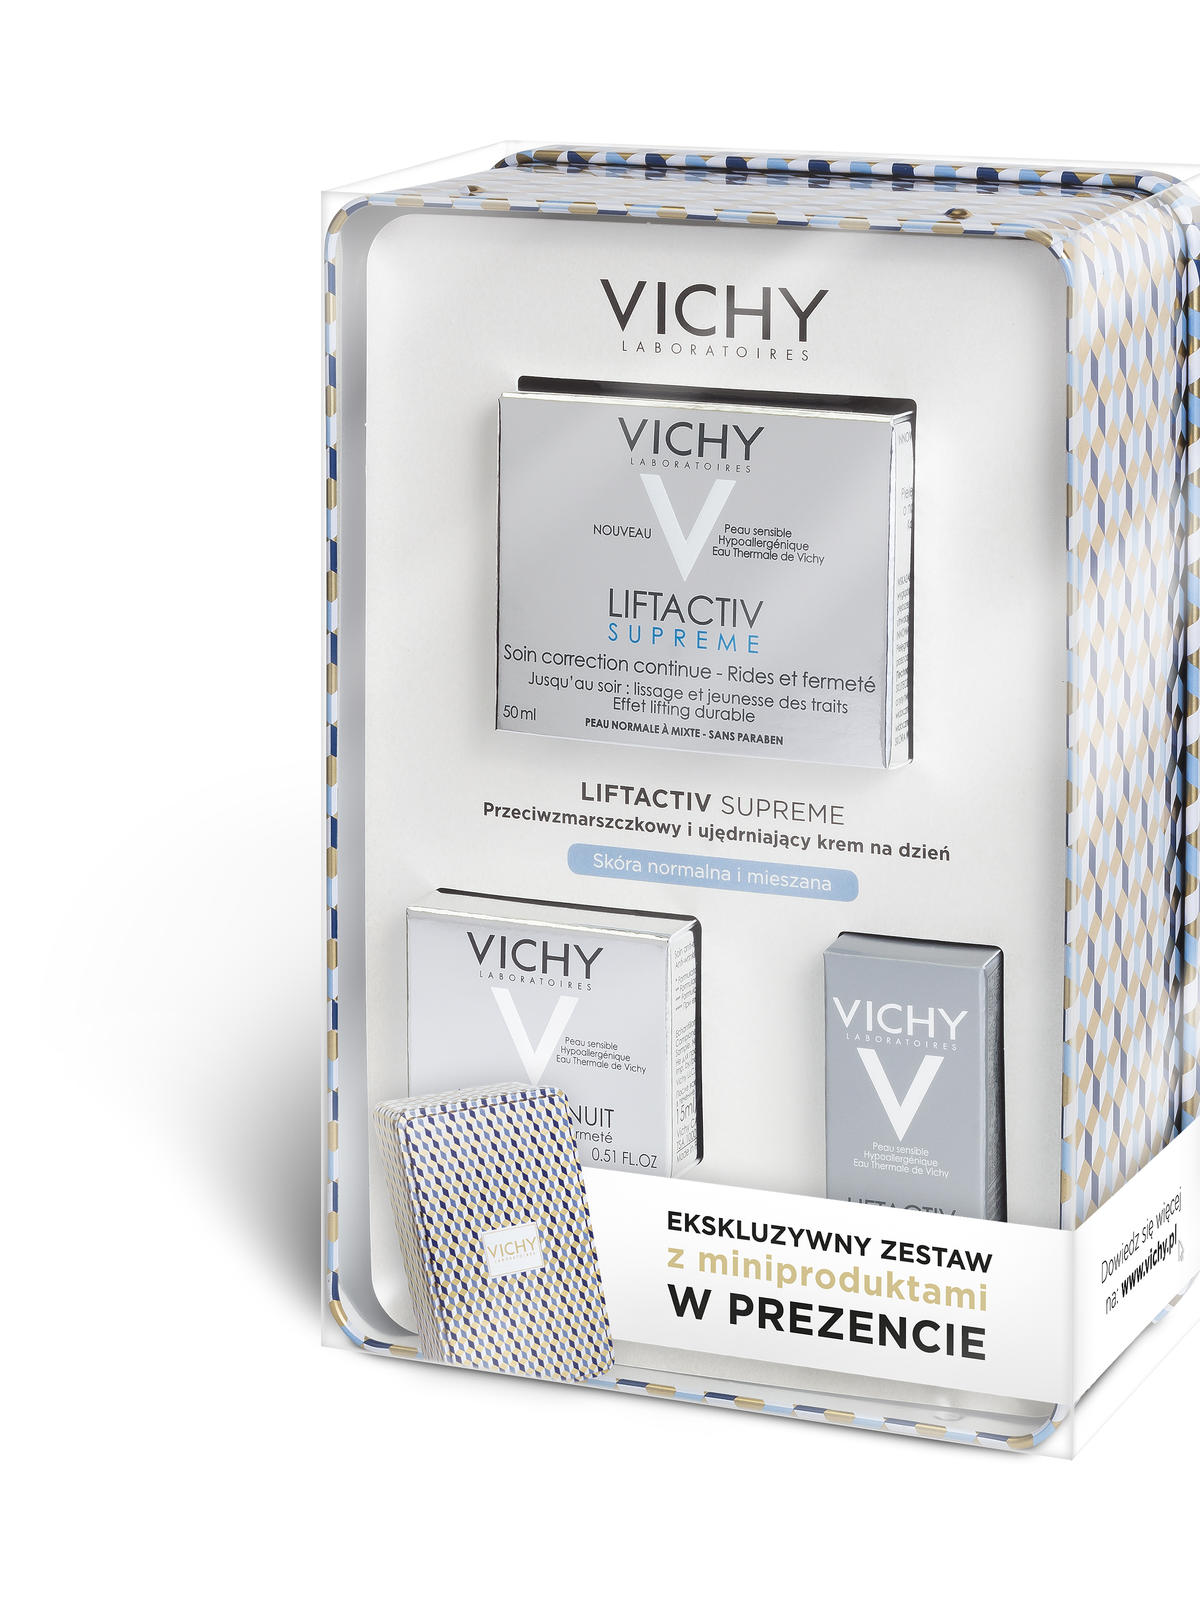 Vichy - około 130 zł